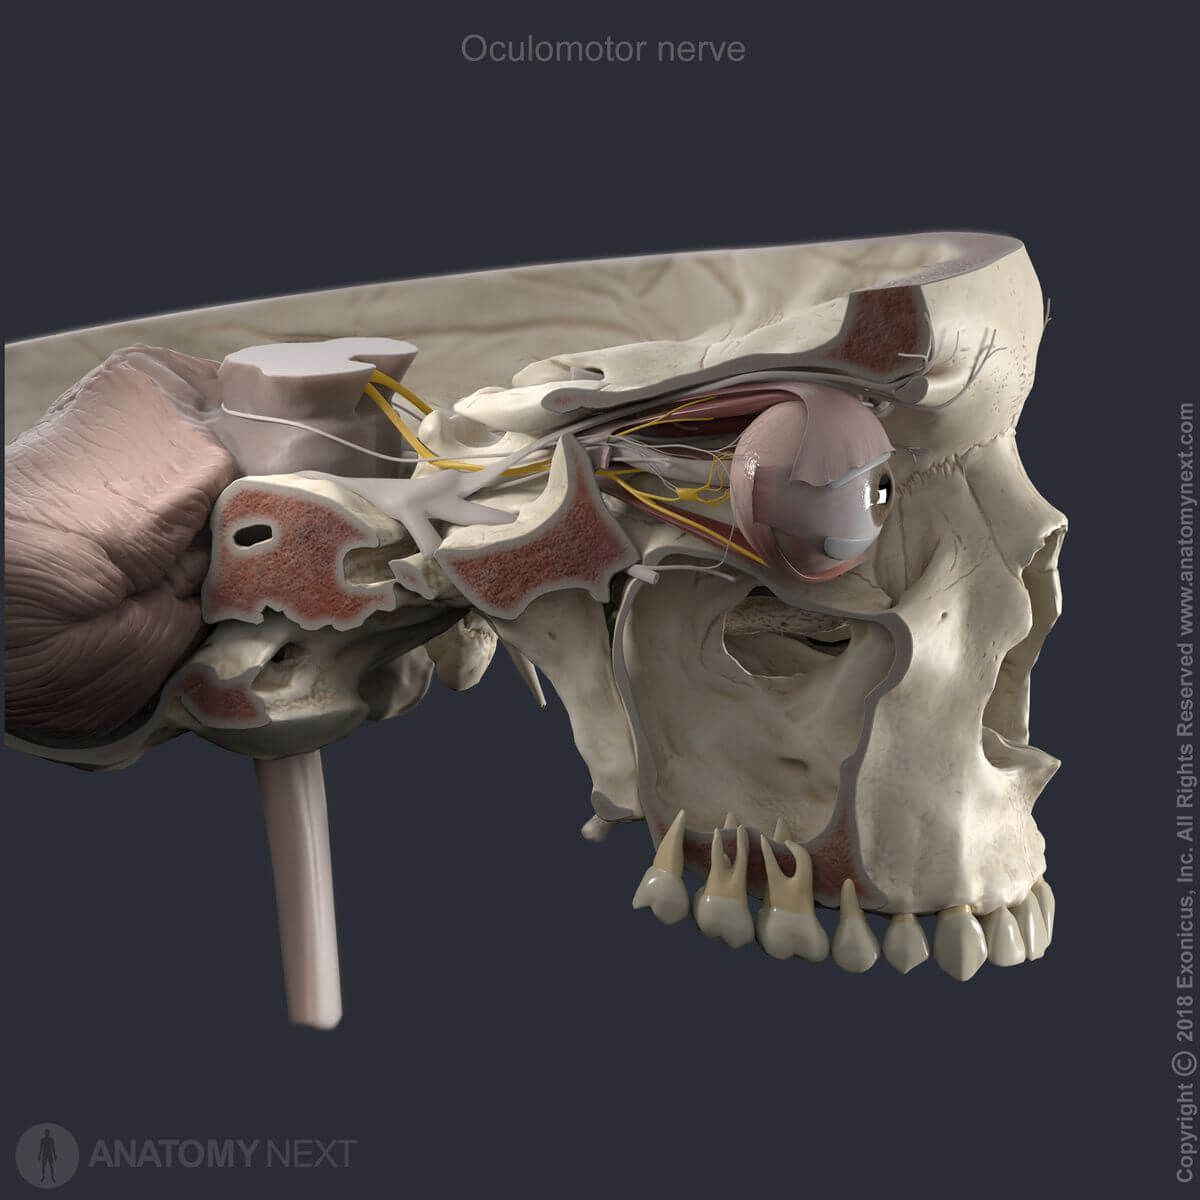 Oculomotor nerve, third cranial nerve, CN III, in cranial cavity and orbit, eyeball and extra-ocular muscles